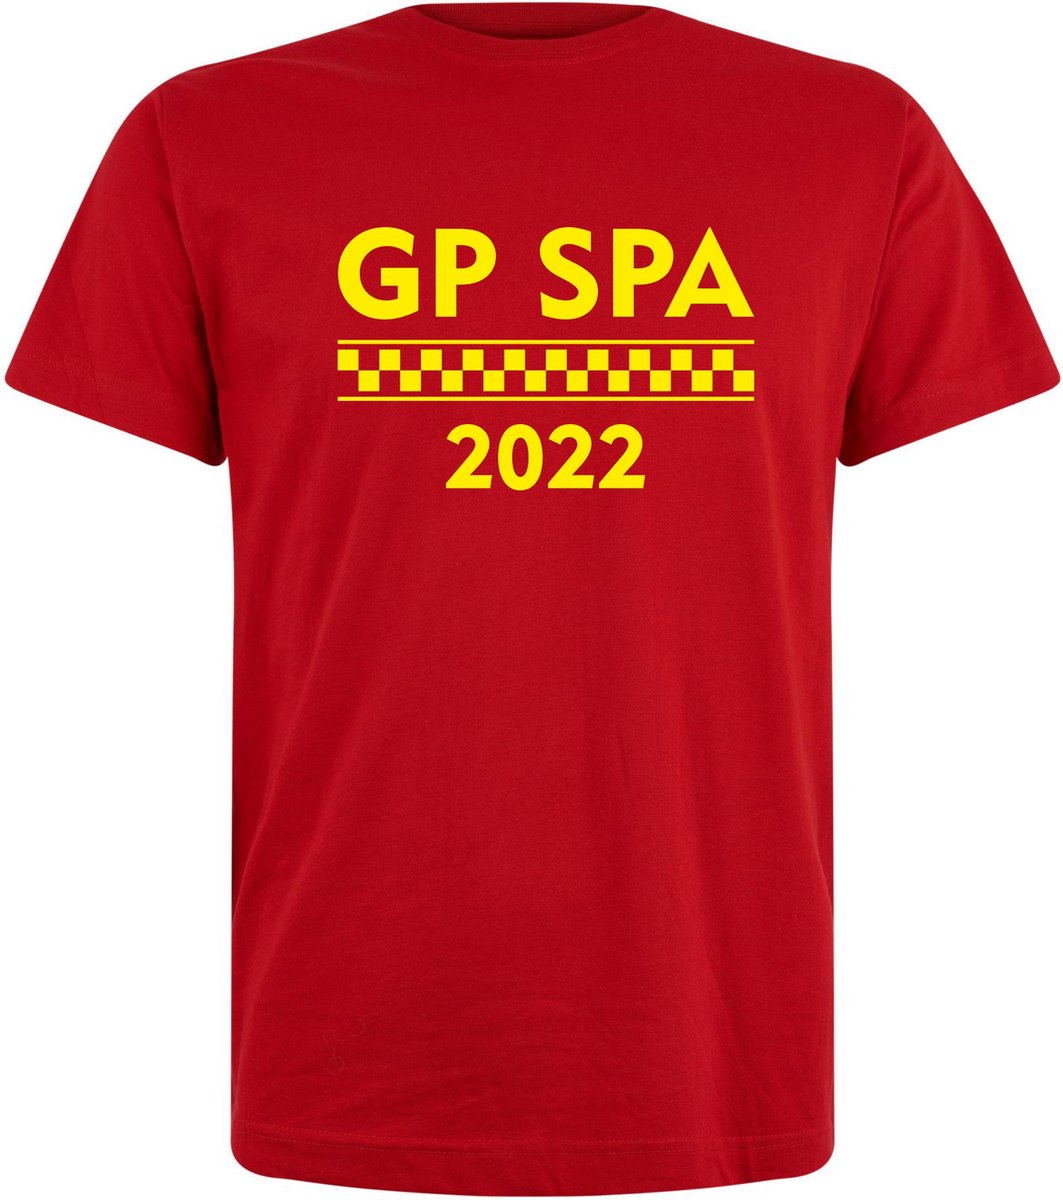 T-shirt kinderen GP Spa 2022 | Max Verstappen / Red Bull Racing / Formule 1 fan | Grand Prix Circuit Spa-Francorchamps | kleding shirt | Rood | maat 92